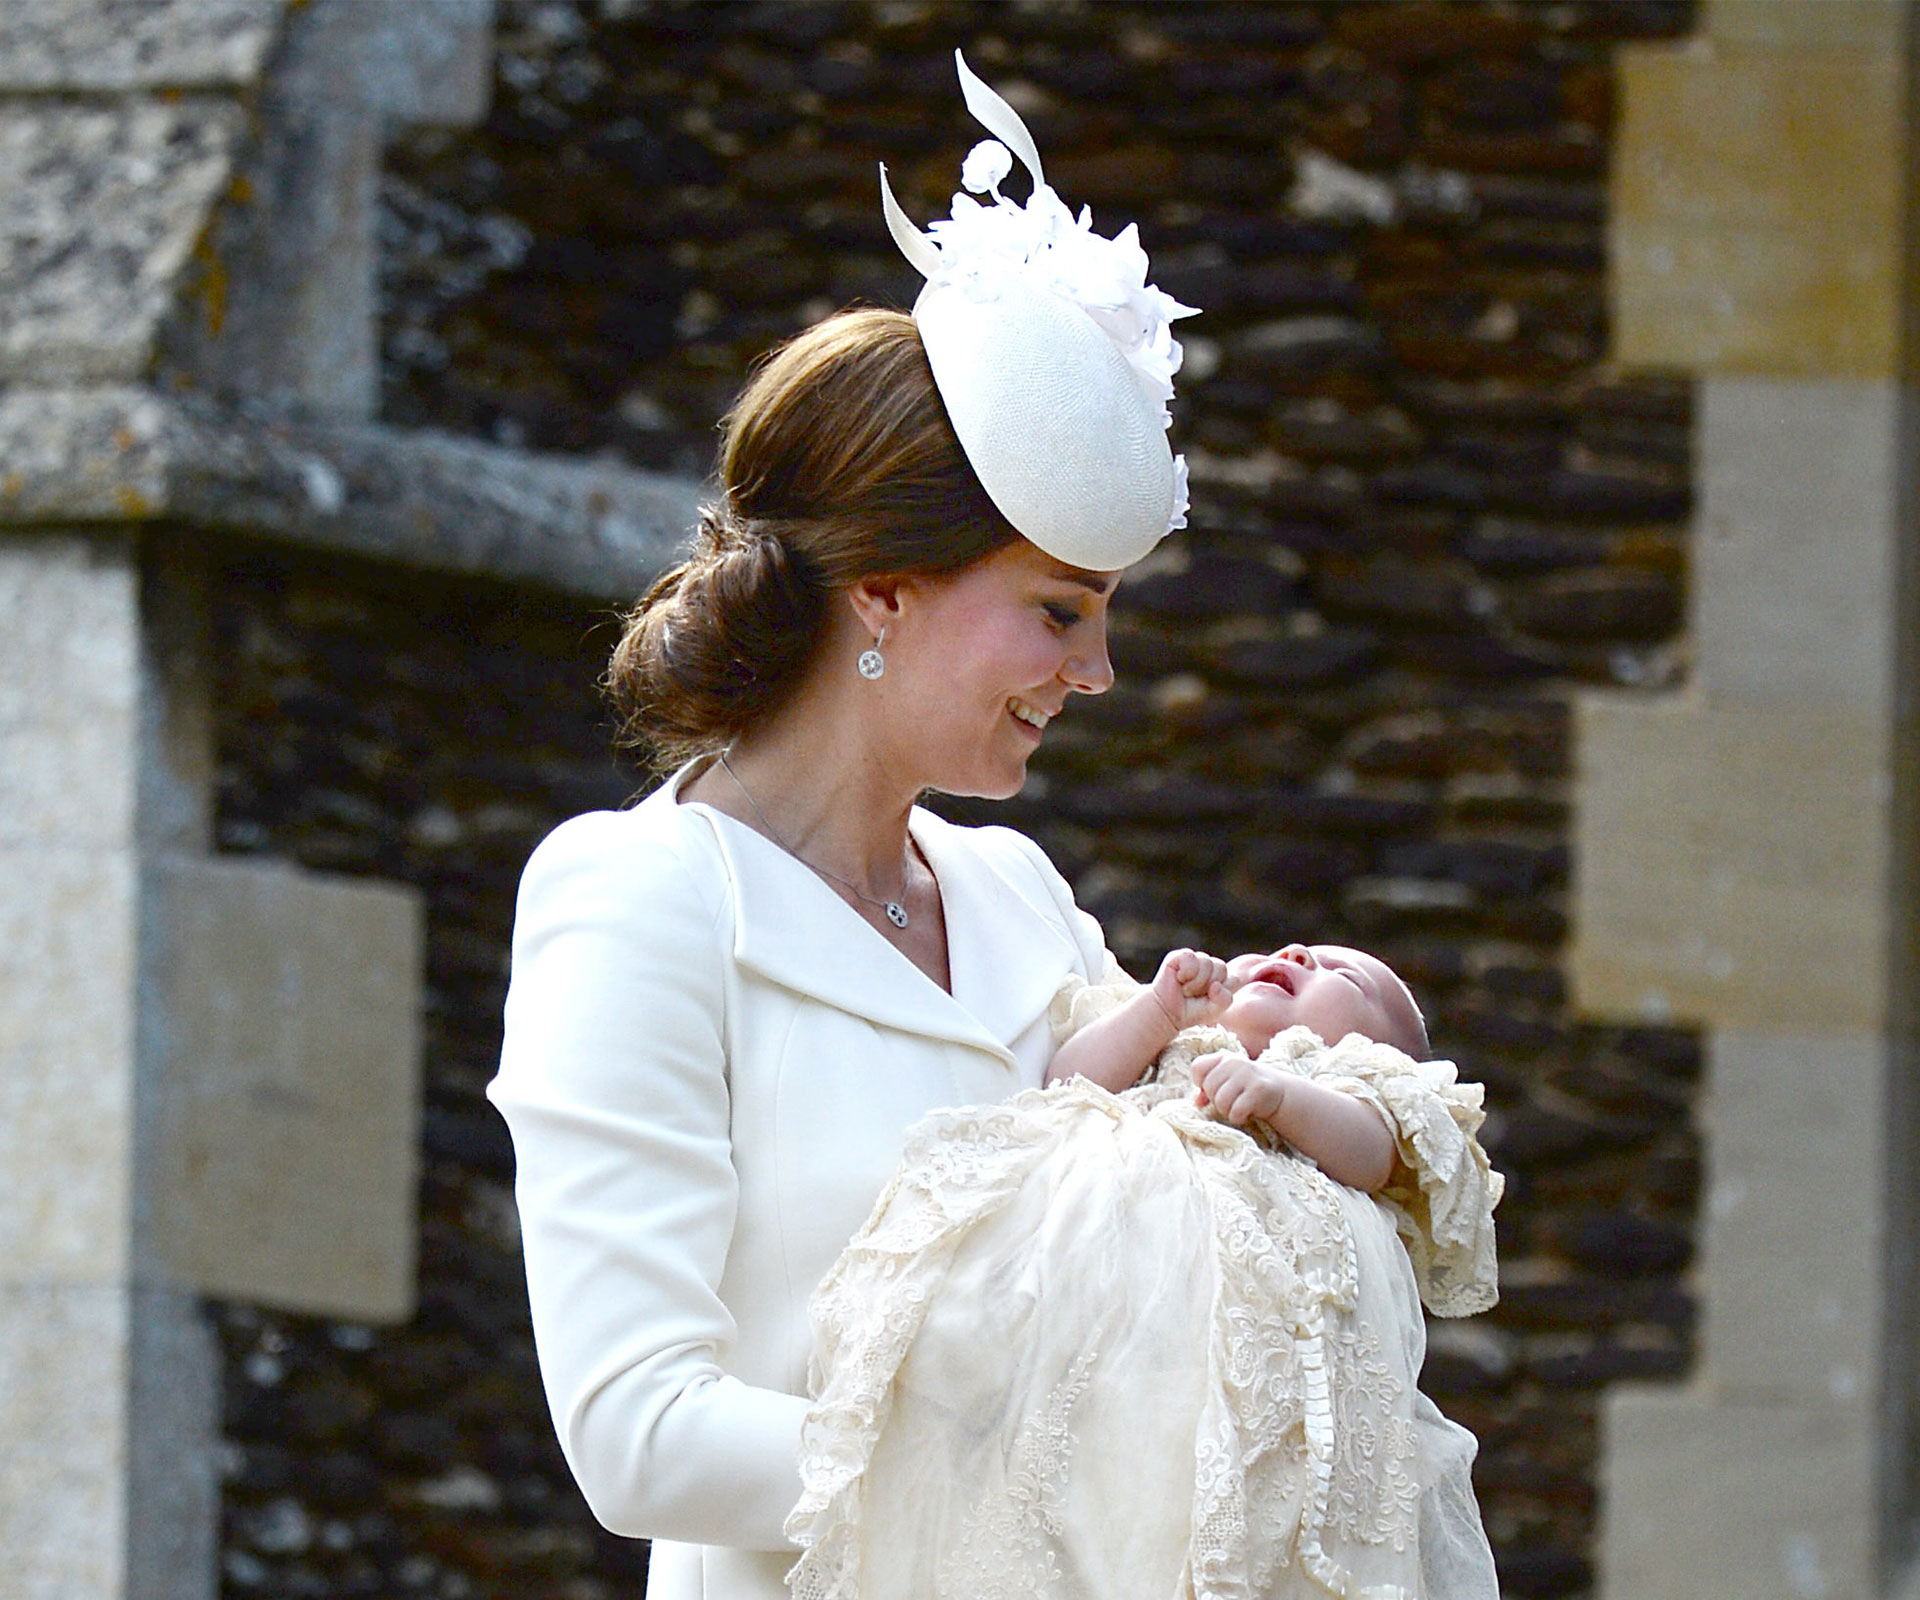 Princess Charlotte is christened